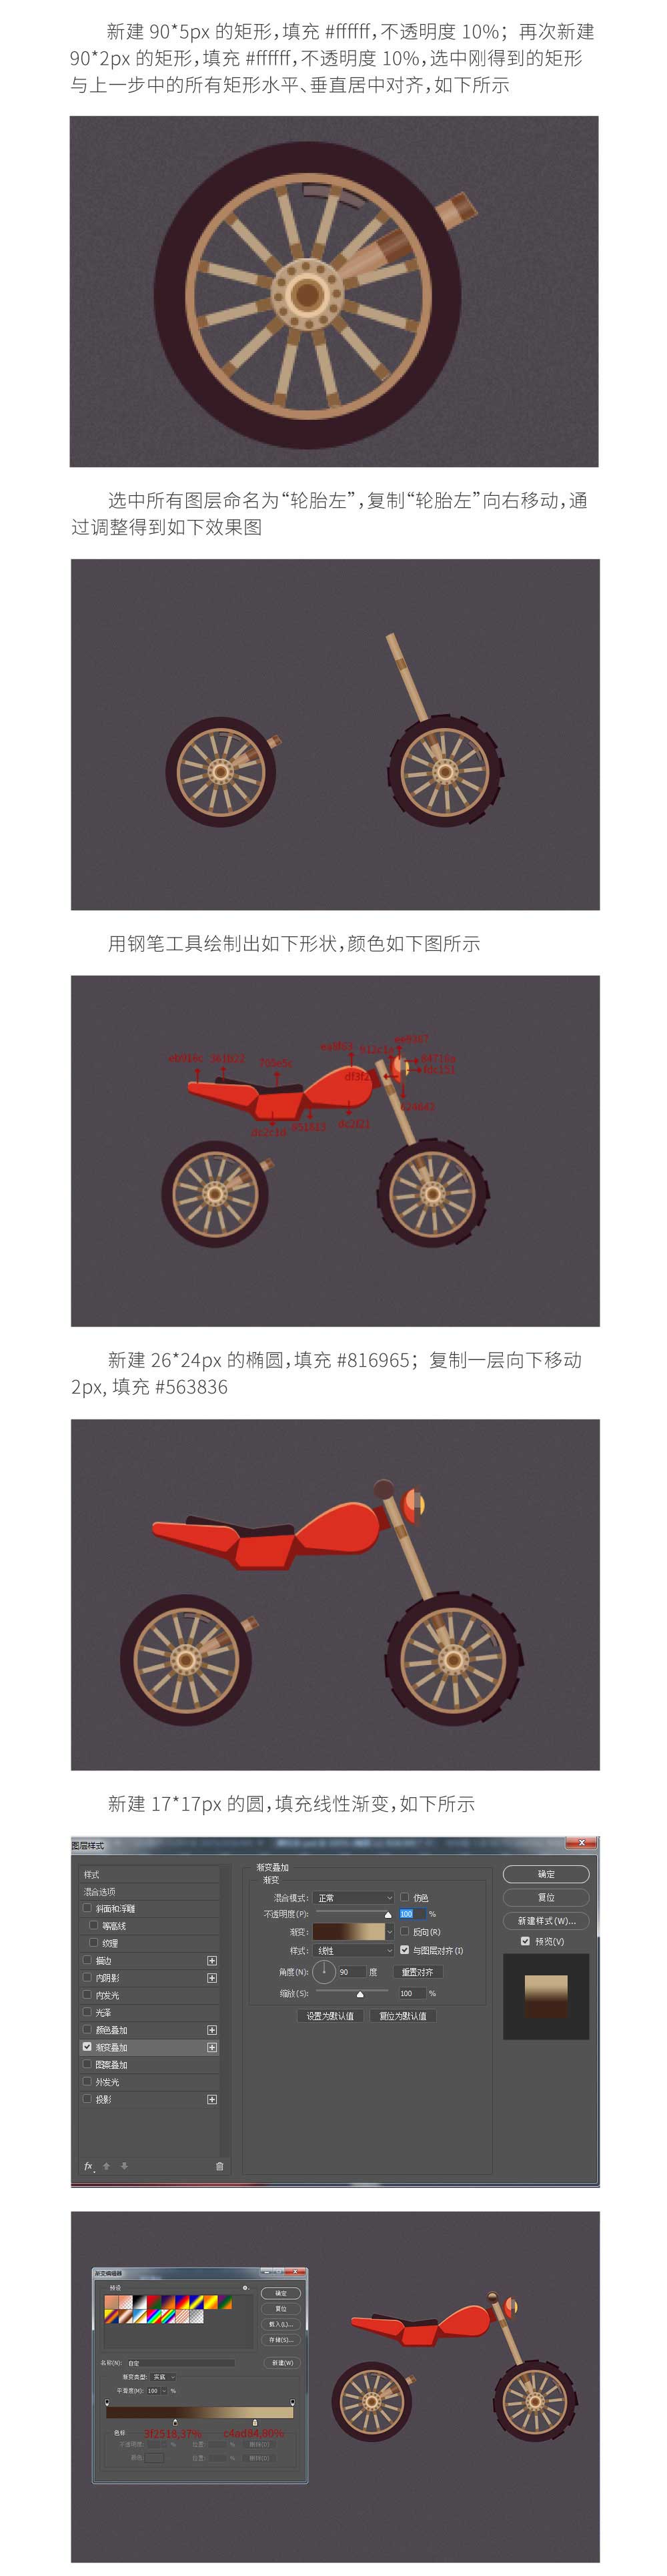 ps摩托车怎么做(摩托车ps效果图)